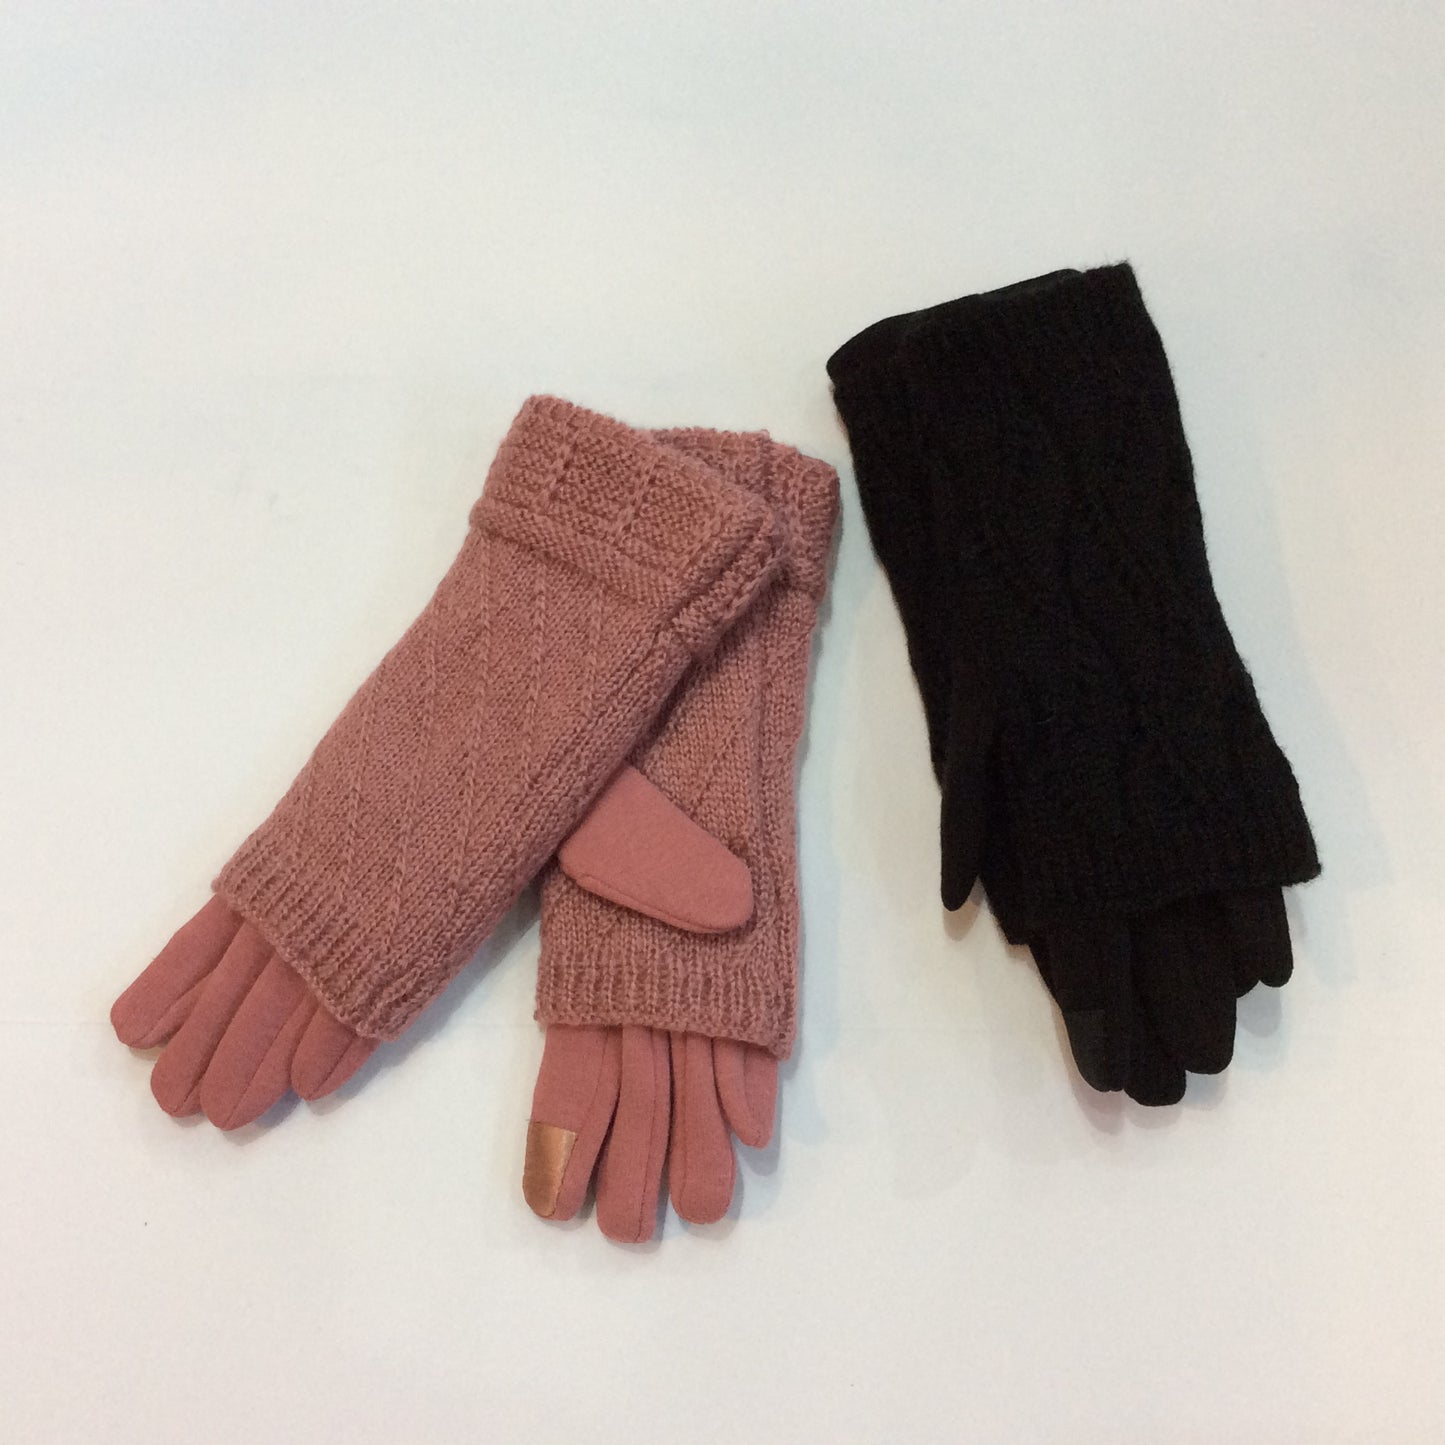 Knit cuff with glove insert